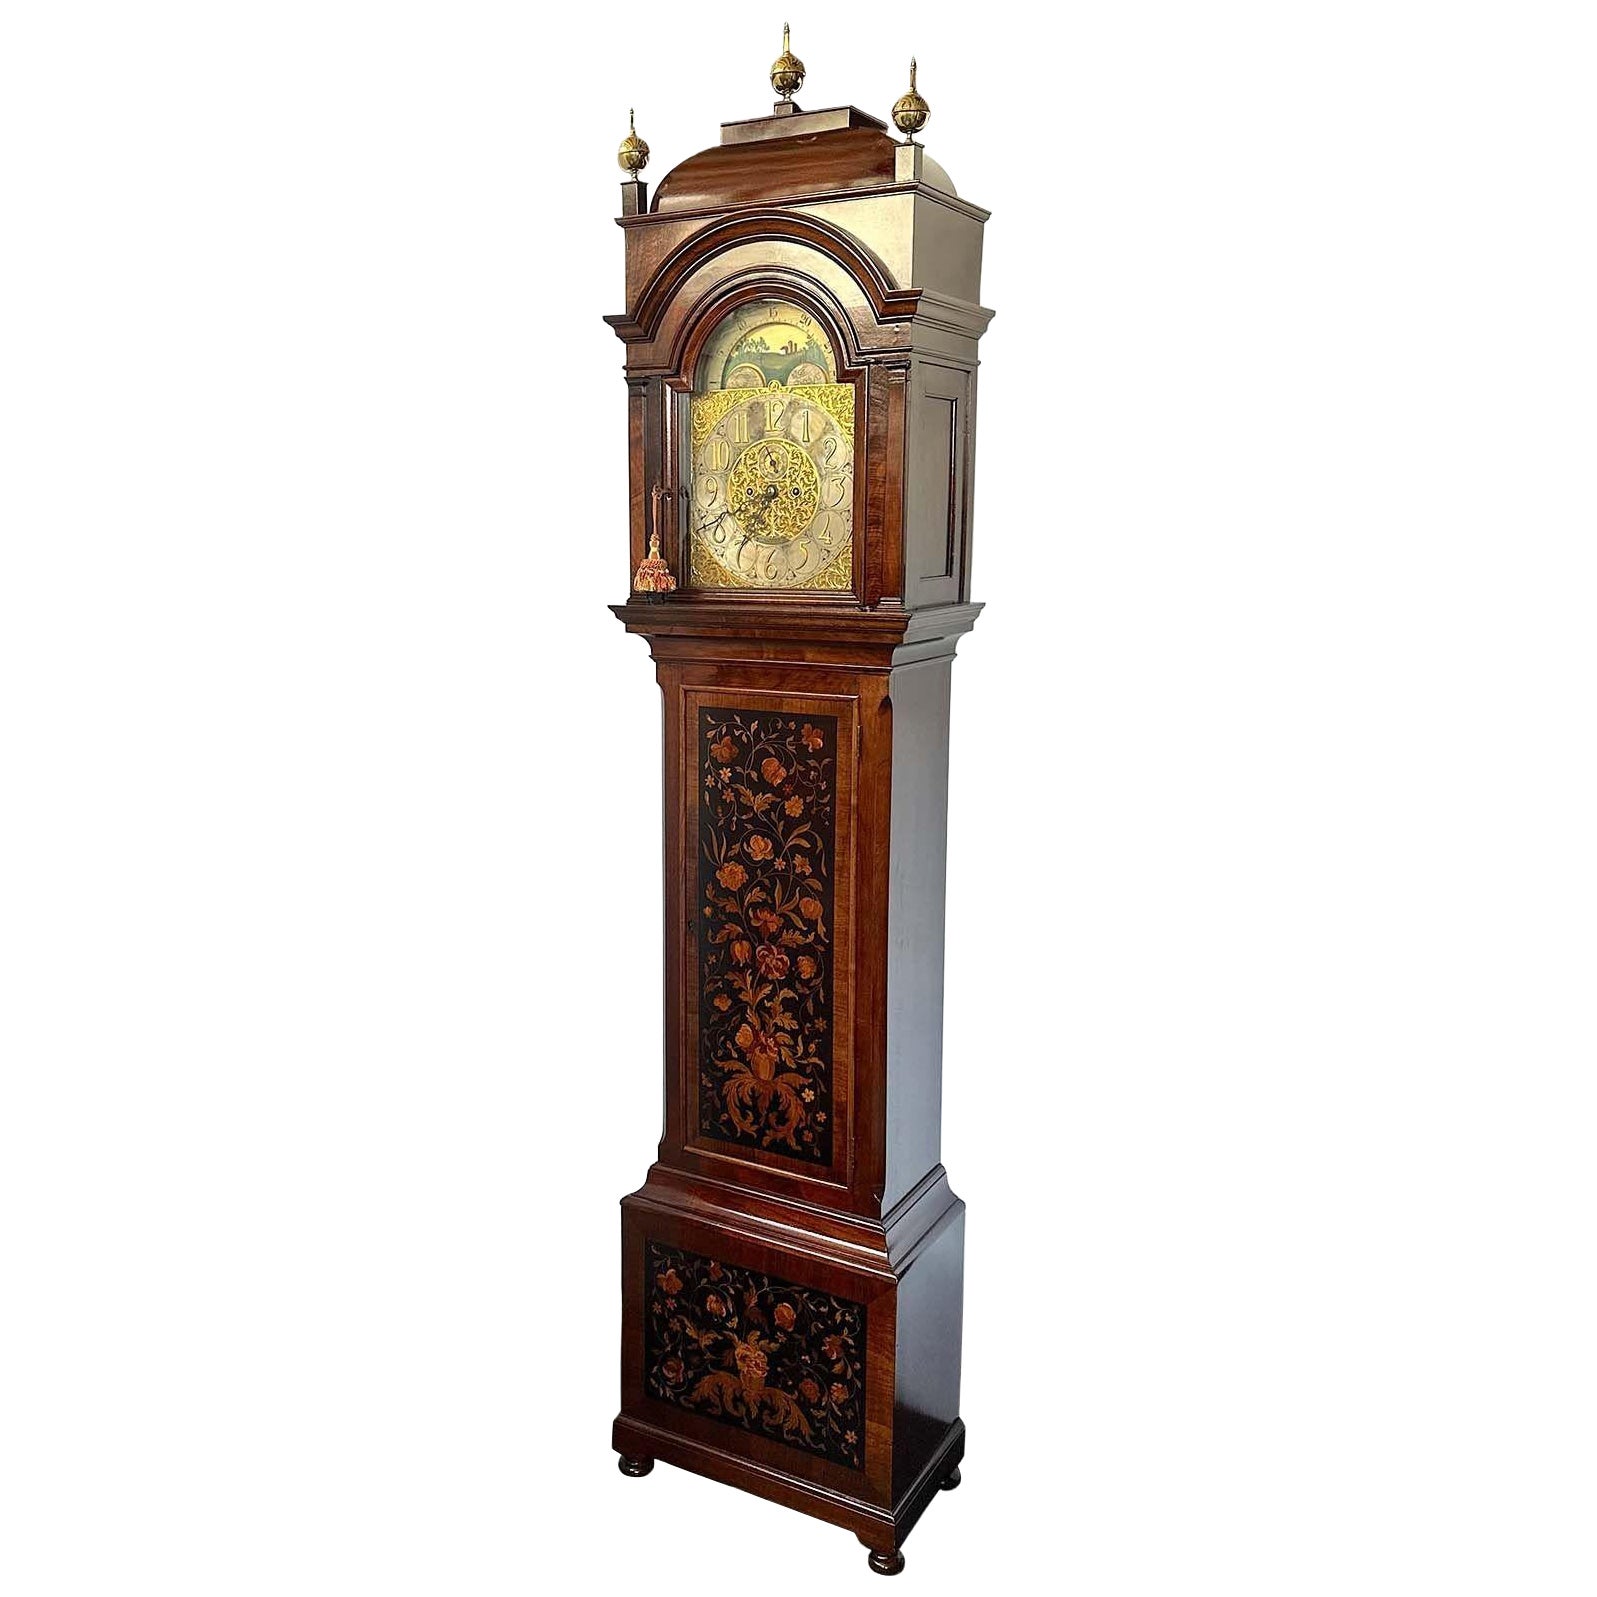 J.J. Elliot Mahogany Grandfather Clock for Tiffany & Co. (c. 1915) For Sale